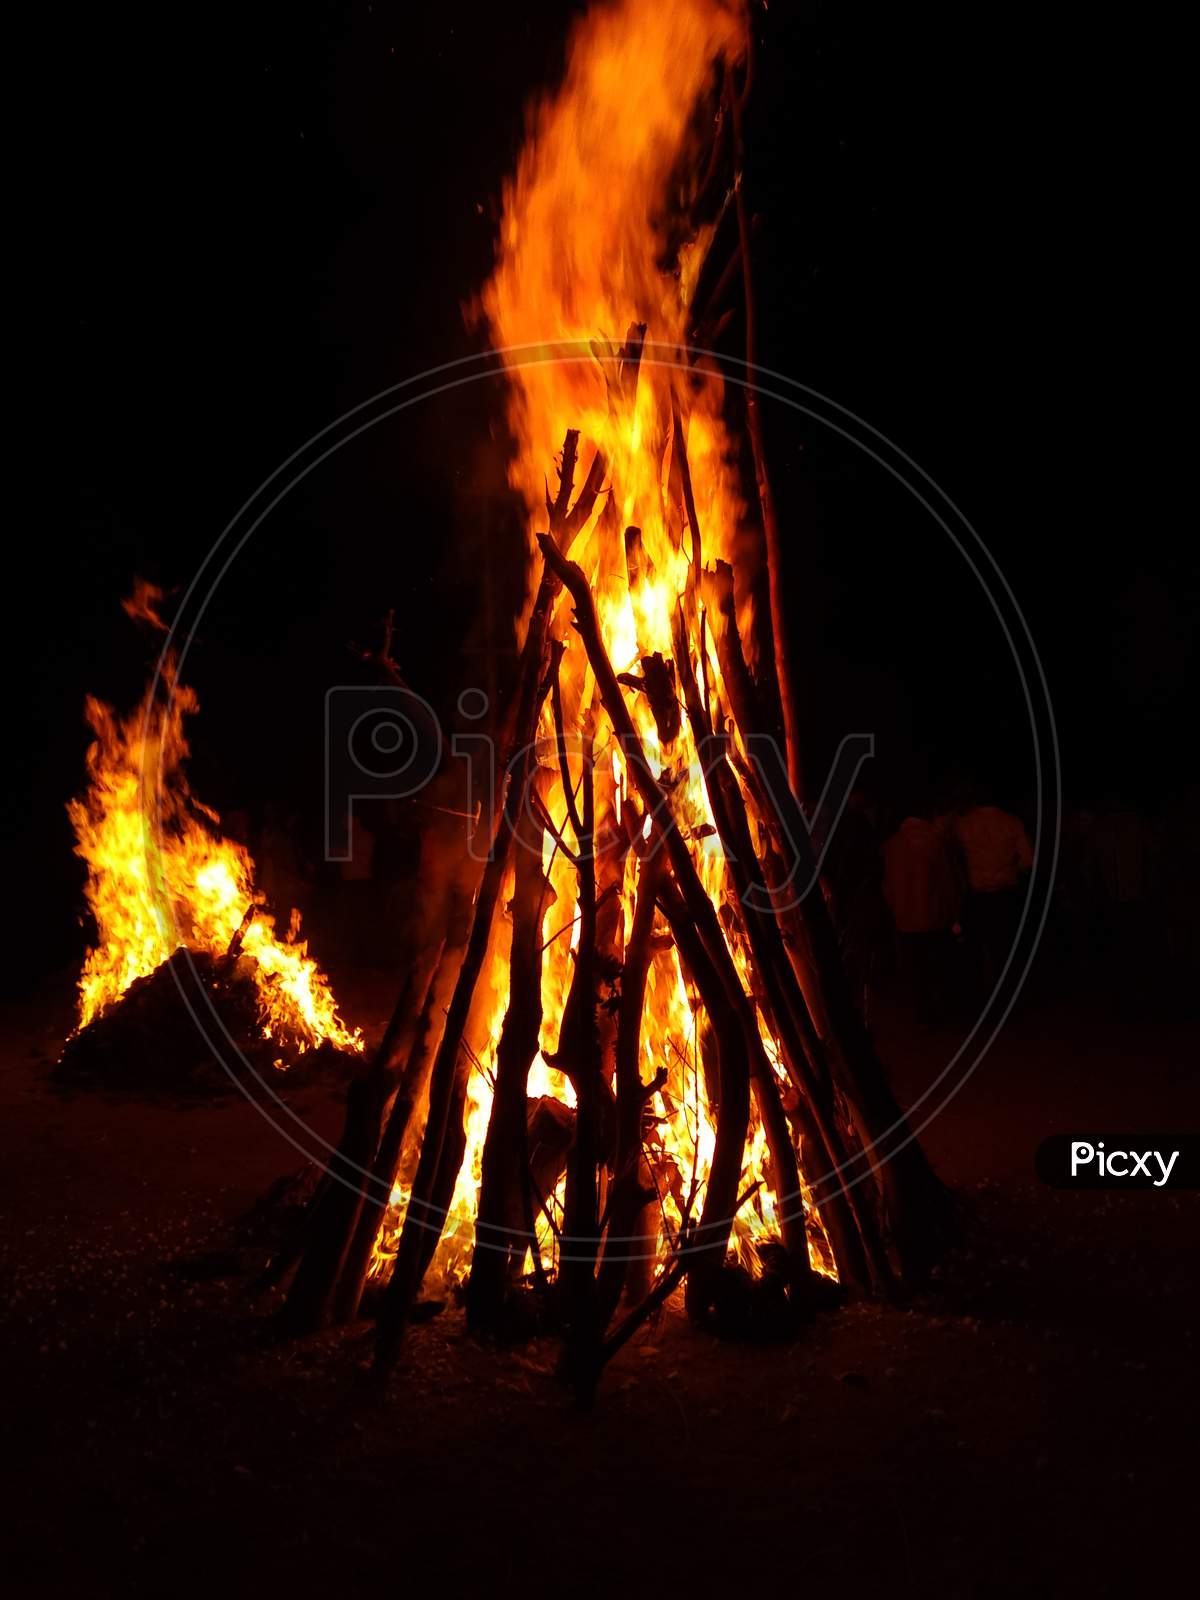 Holika dahan indian festival celebration Photograph of a giant bonfire lit for the auspicious festival of lohri or Holi or Holika Dahan